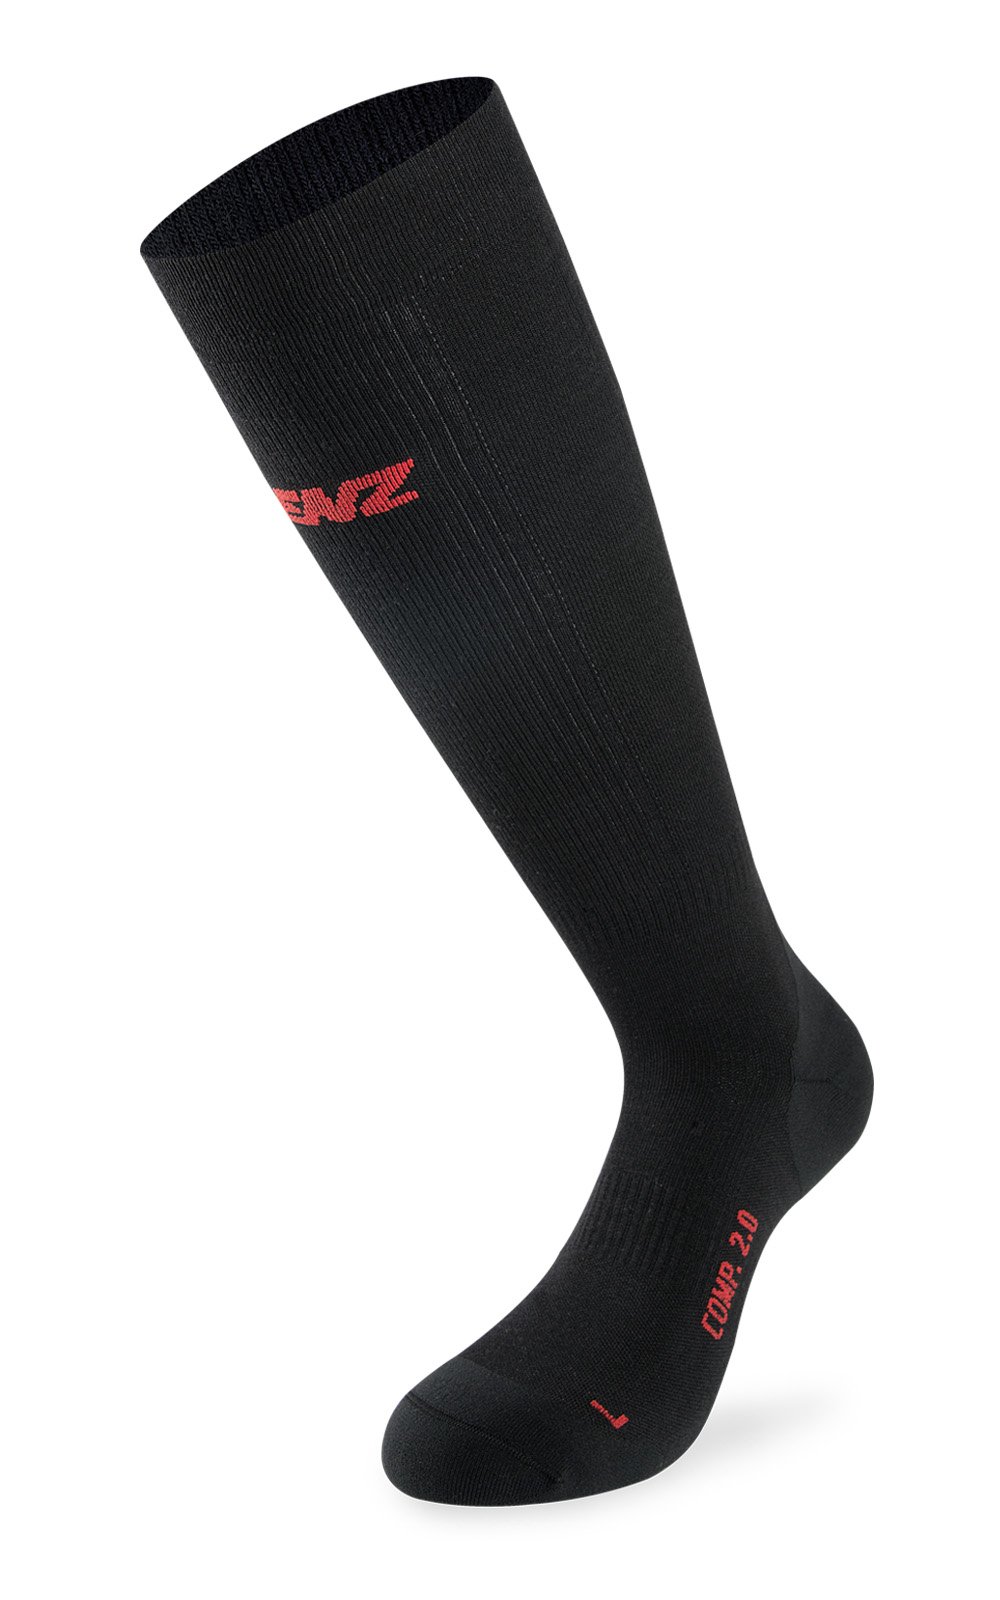 LENZ Compression socks 2.0 merino